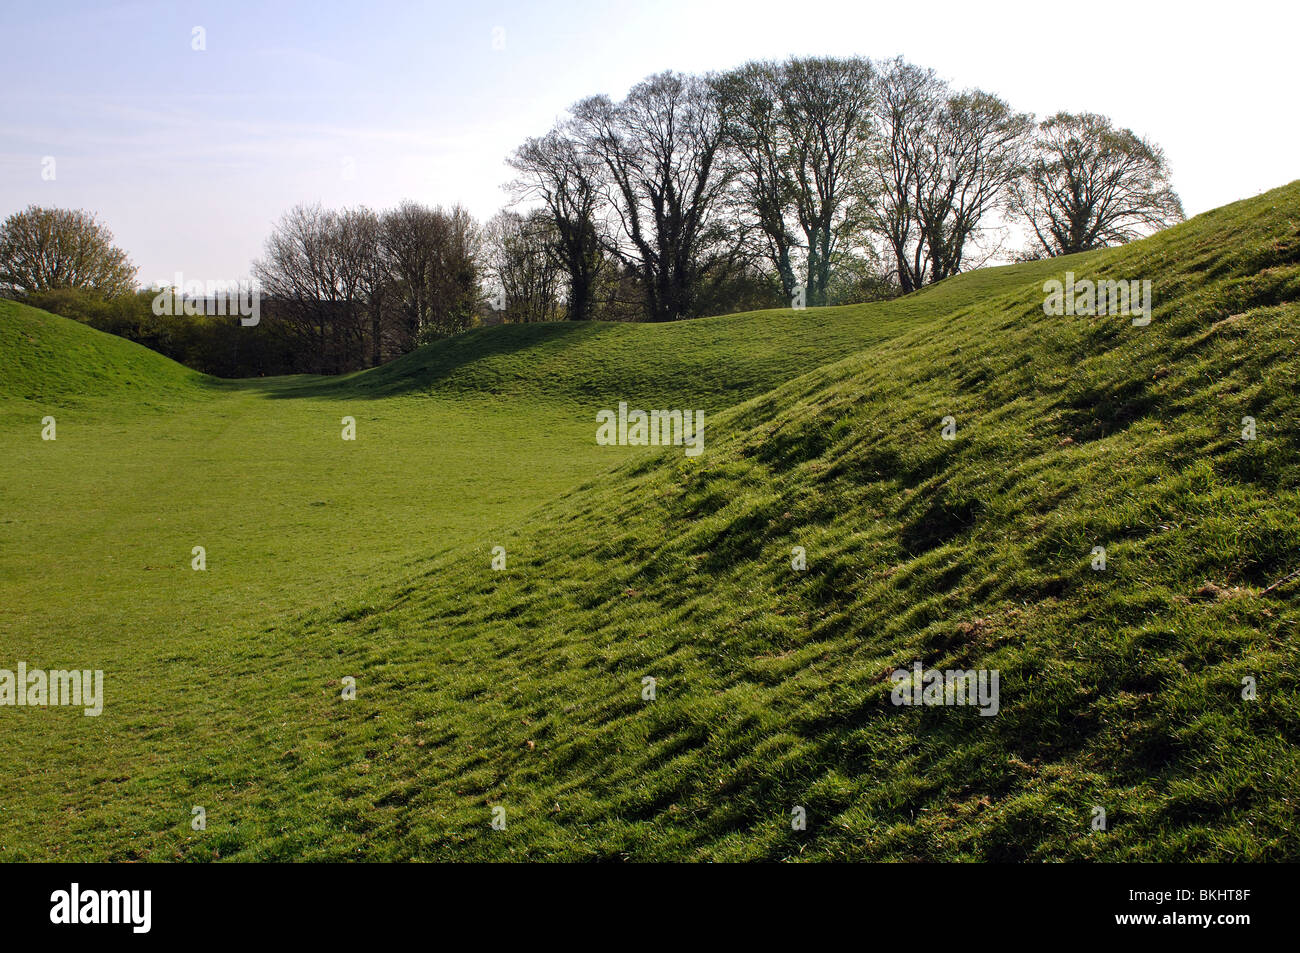 The Roman Ampitheatre, Cirencester, Gloucestershire, England, UK Stock Photo